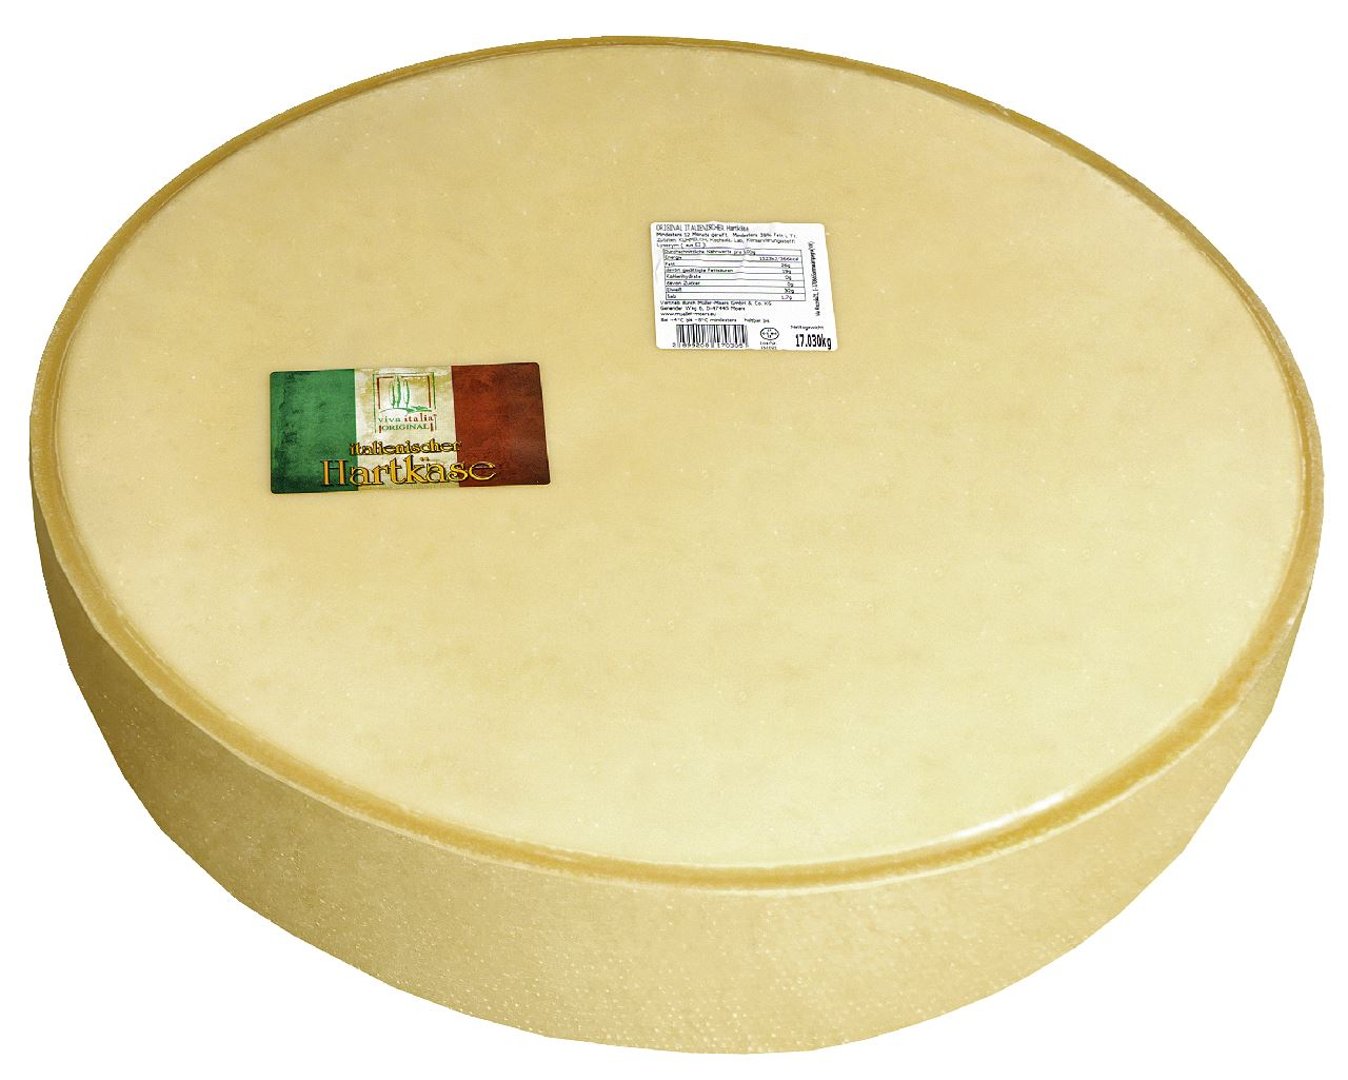 viva italia - Italienischer Hartkäse ½ Laib 39 % Fett ca. 18 kg